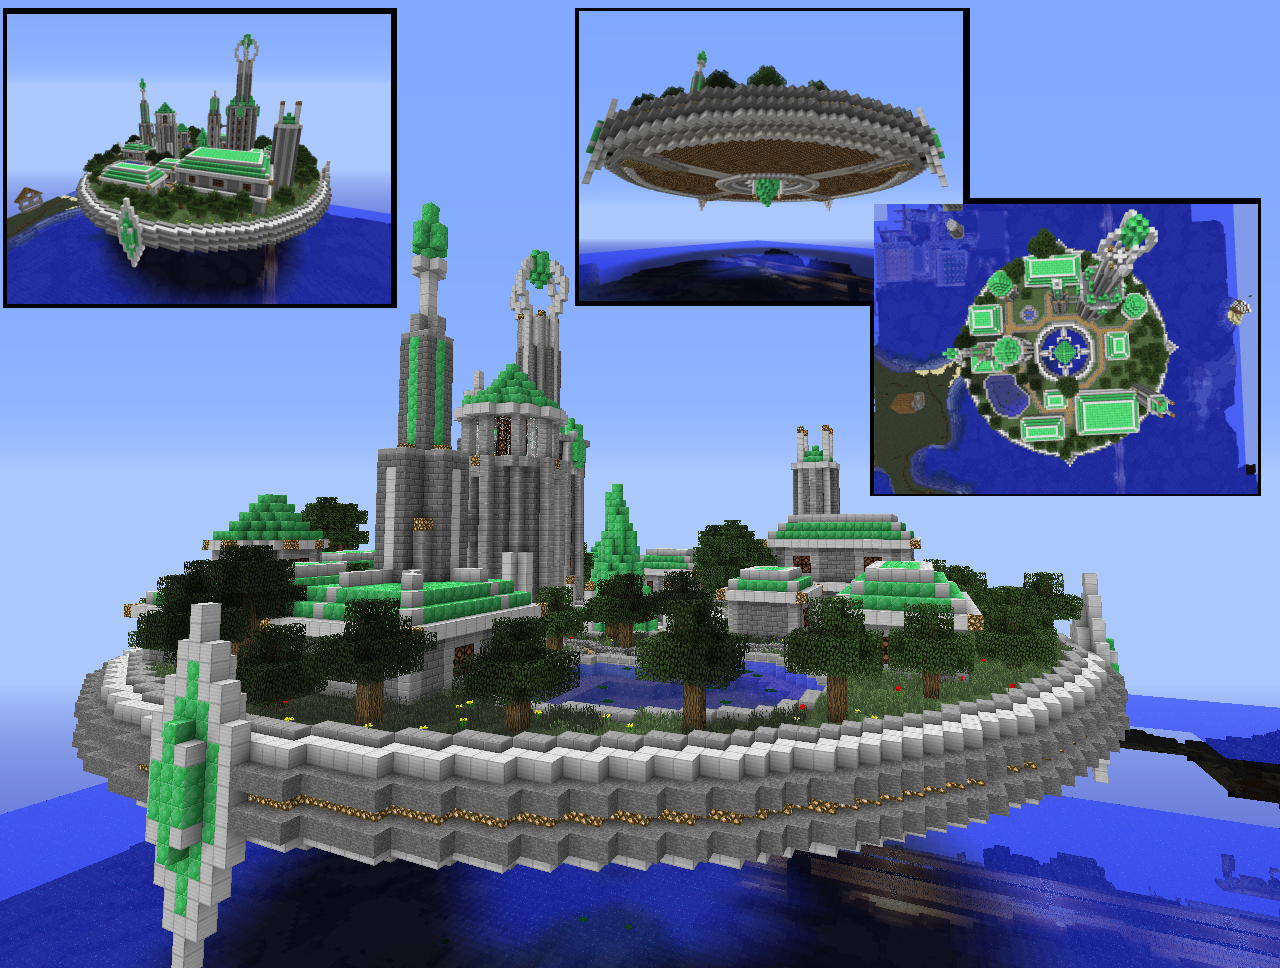 Minecraft - Flying City by Virenth on DeviantArt